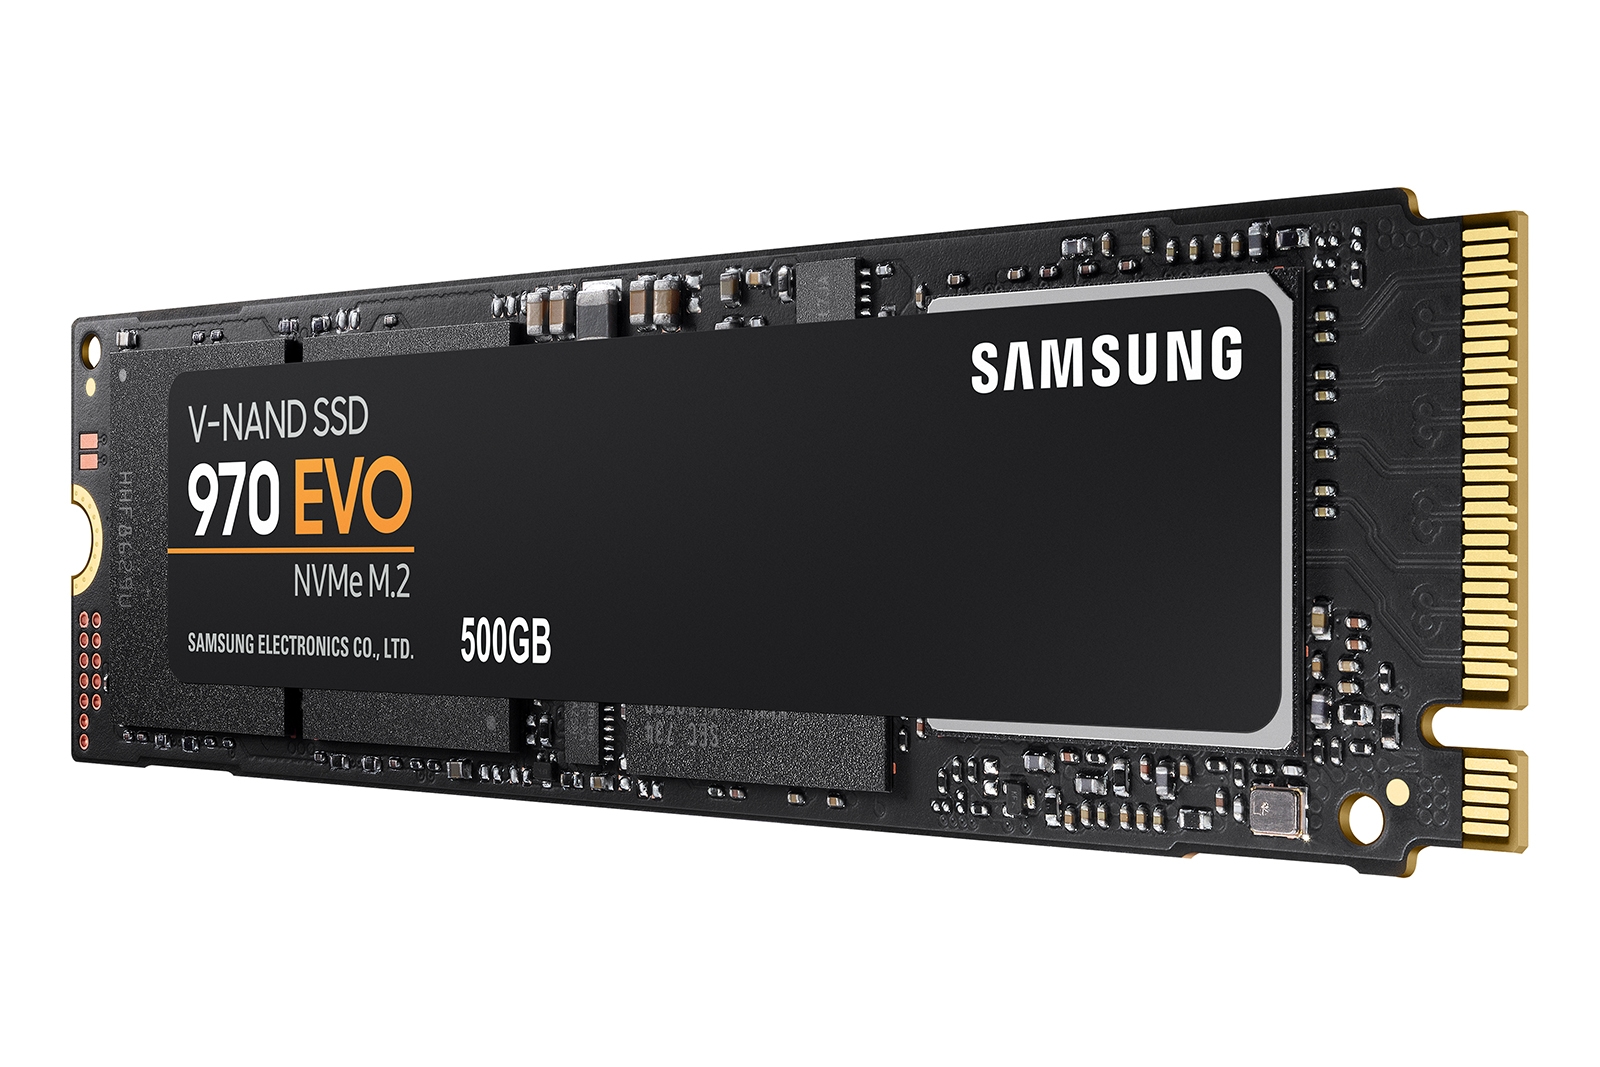 Samsung 970 EVO Plus NVMe M.2 Internal SSD